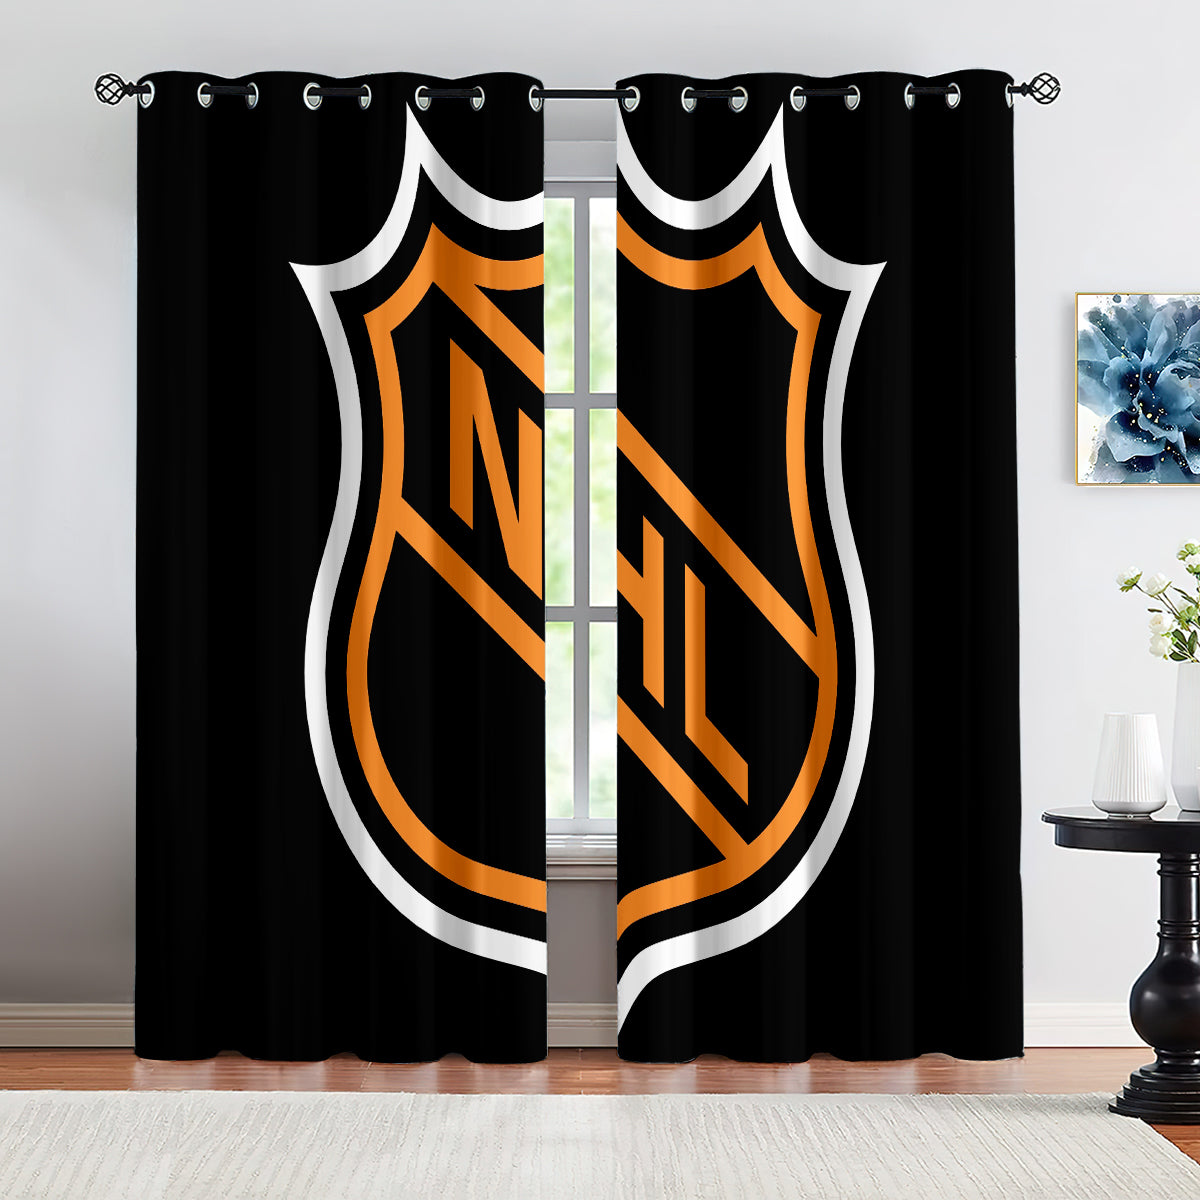 Hockey League Logo Blackout Curtains Drapes For Window Treatment Set